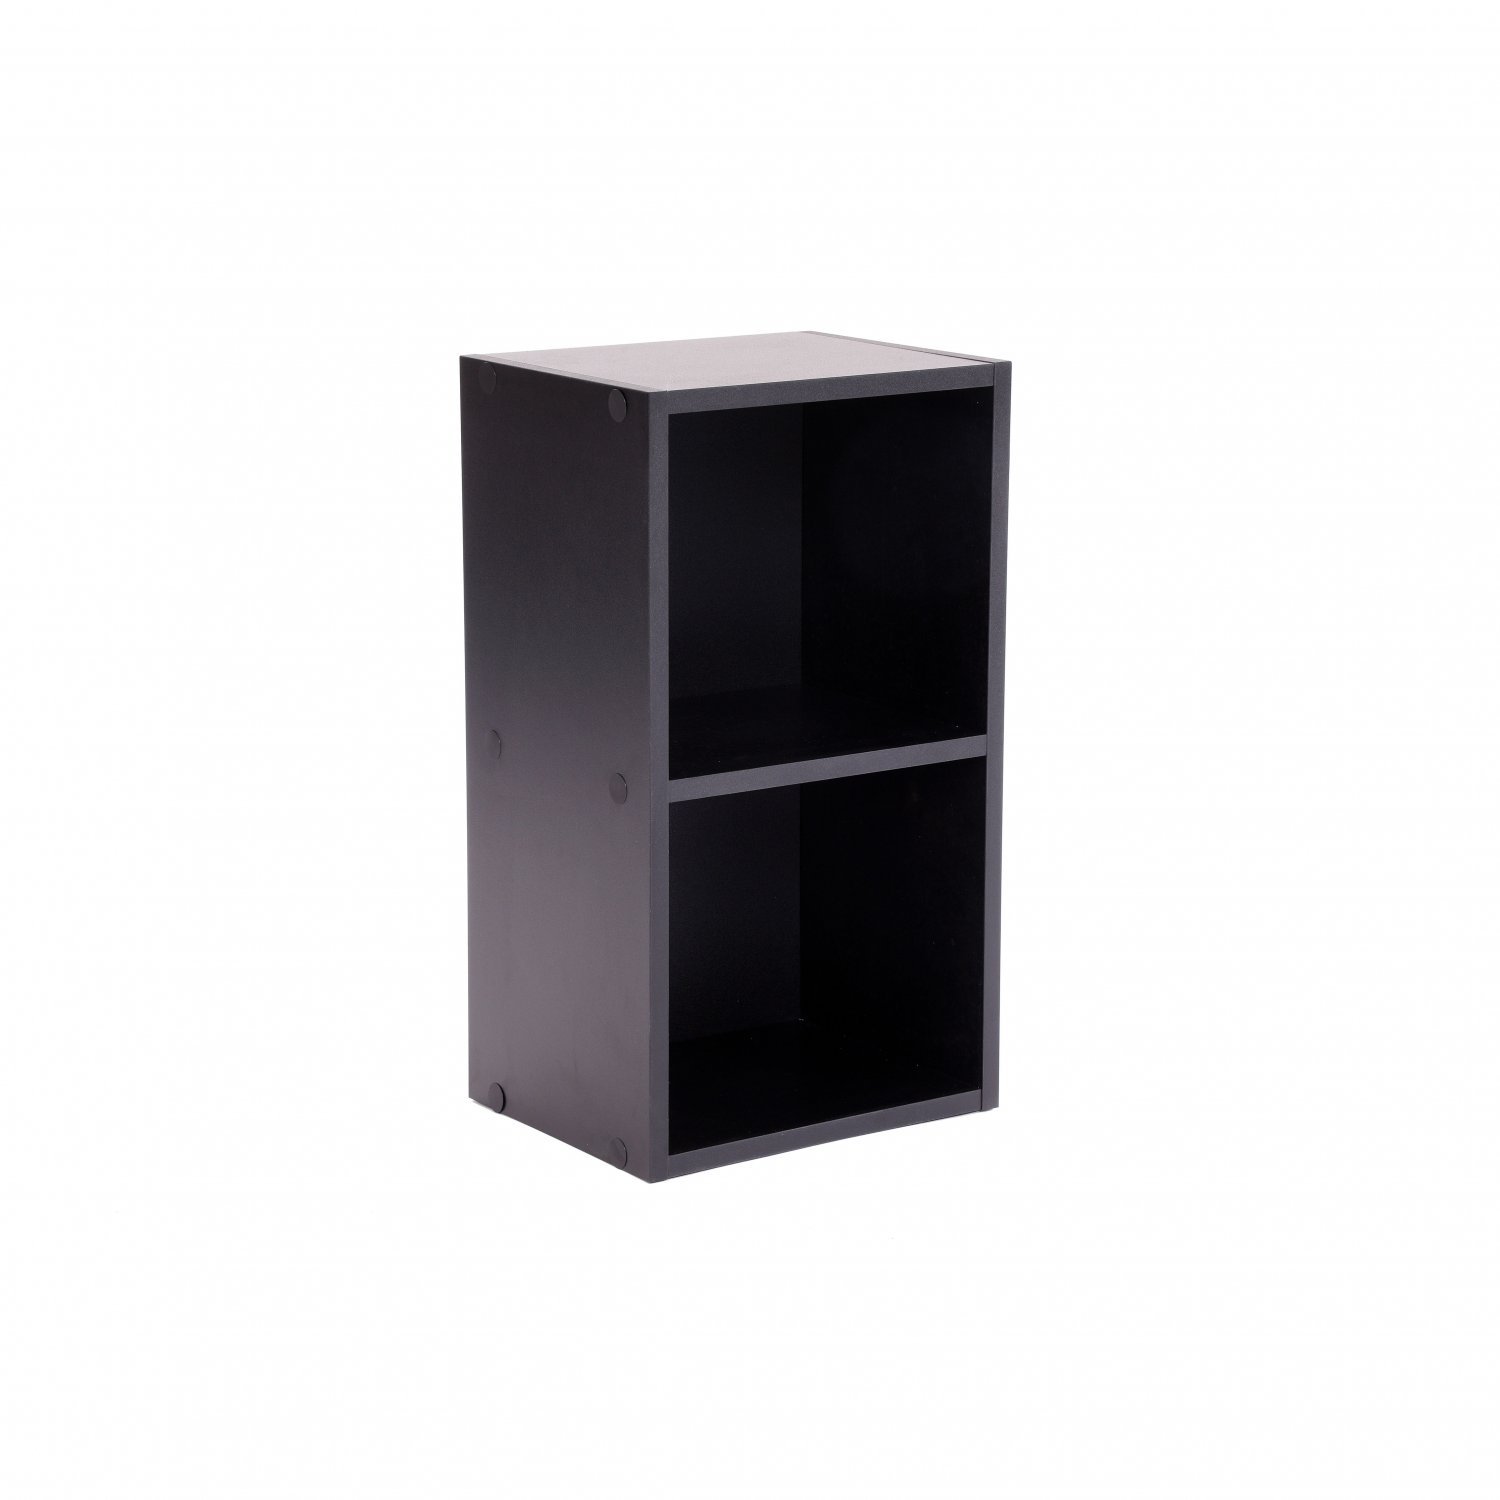 2 Tier Wooden Shelf Black Bookcase Shelving Storage Display Rack